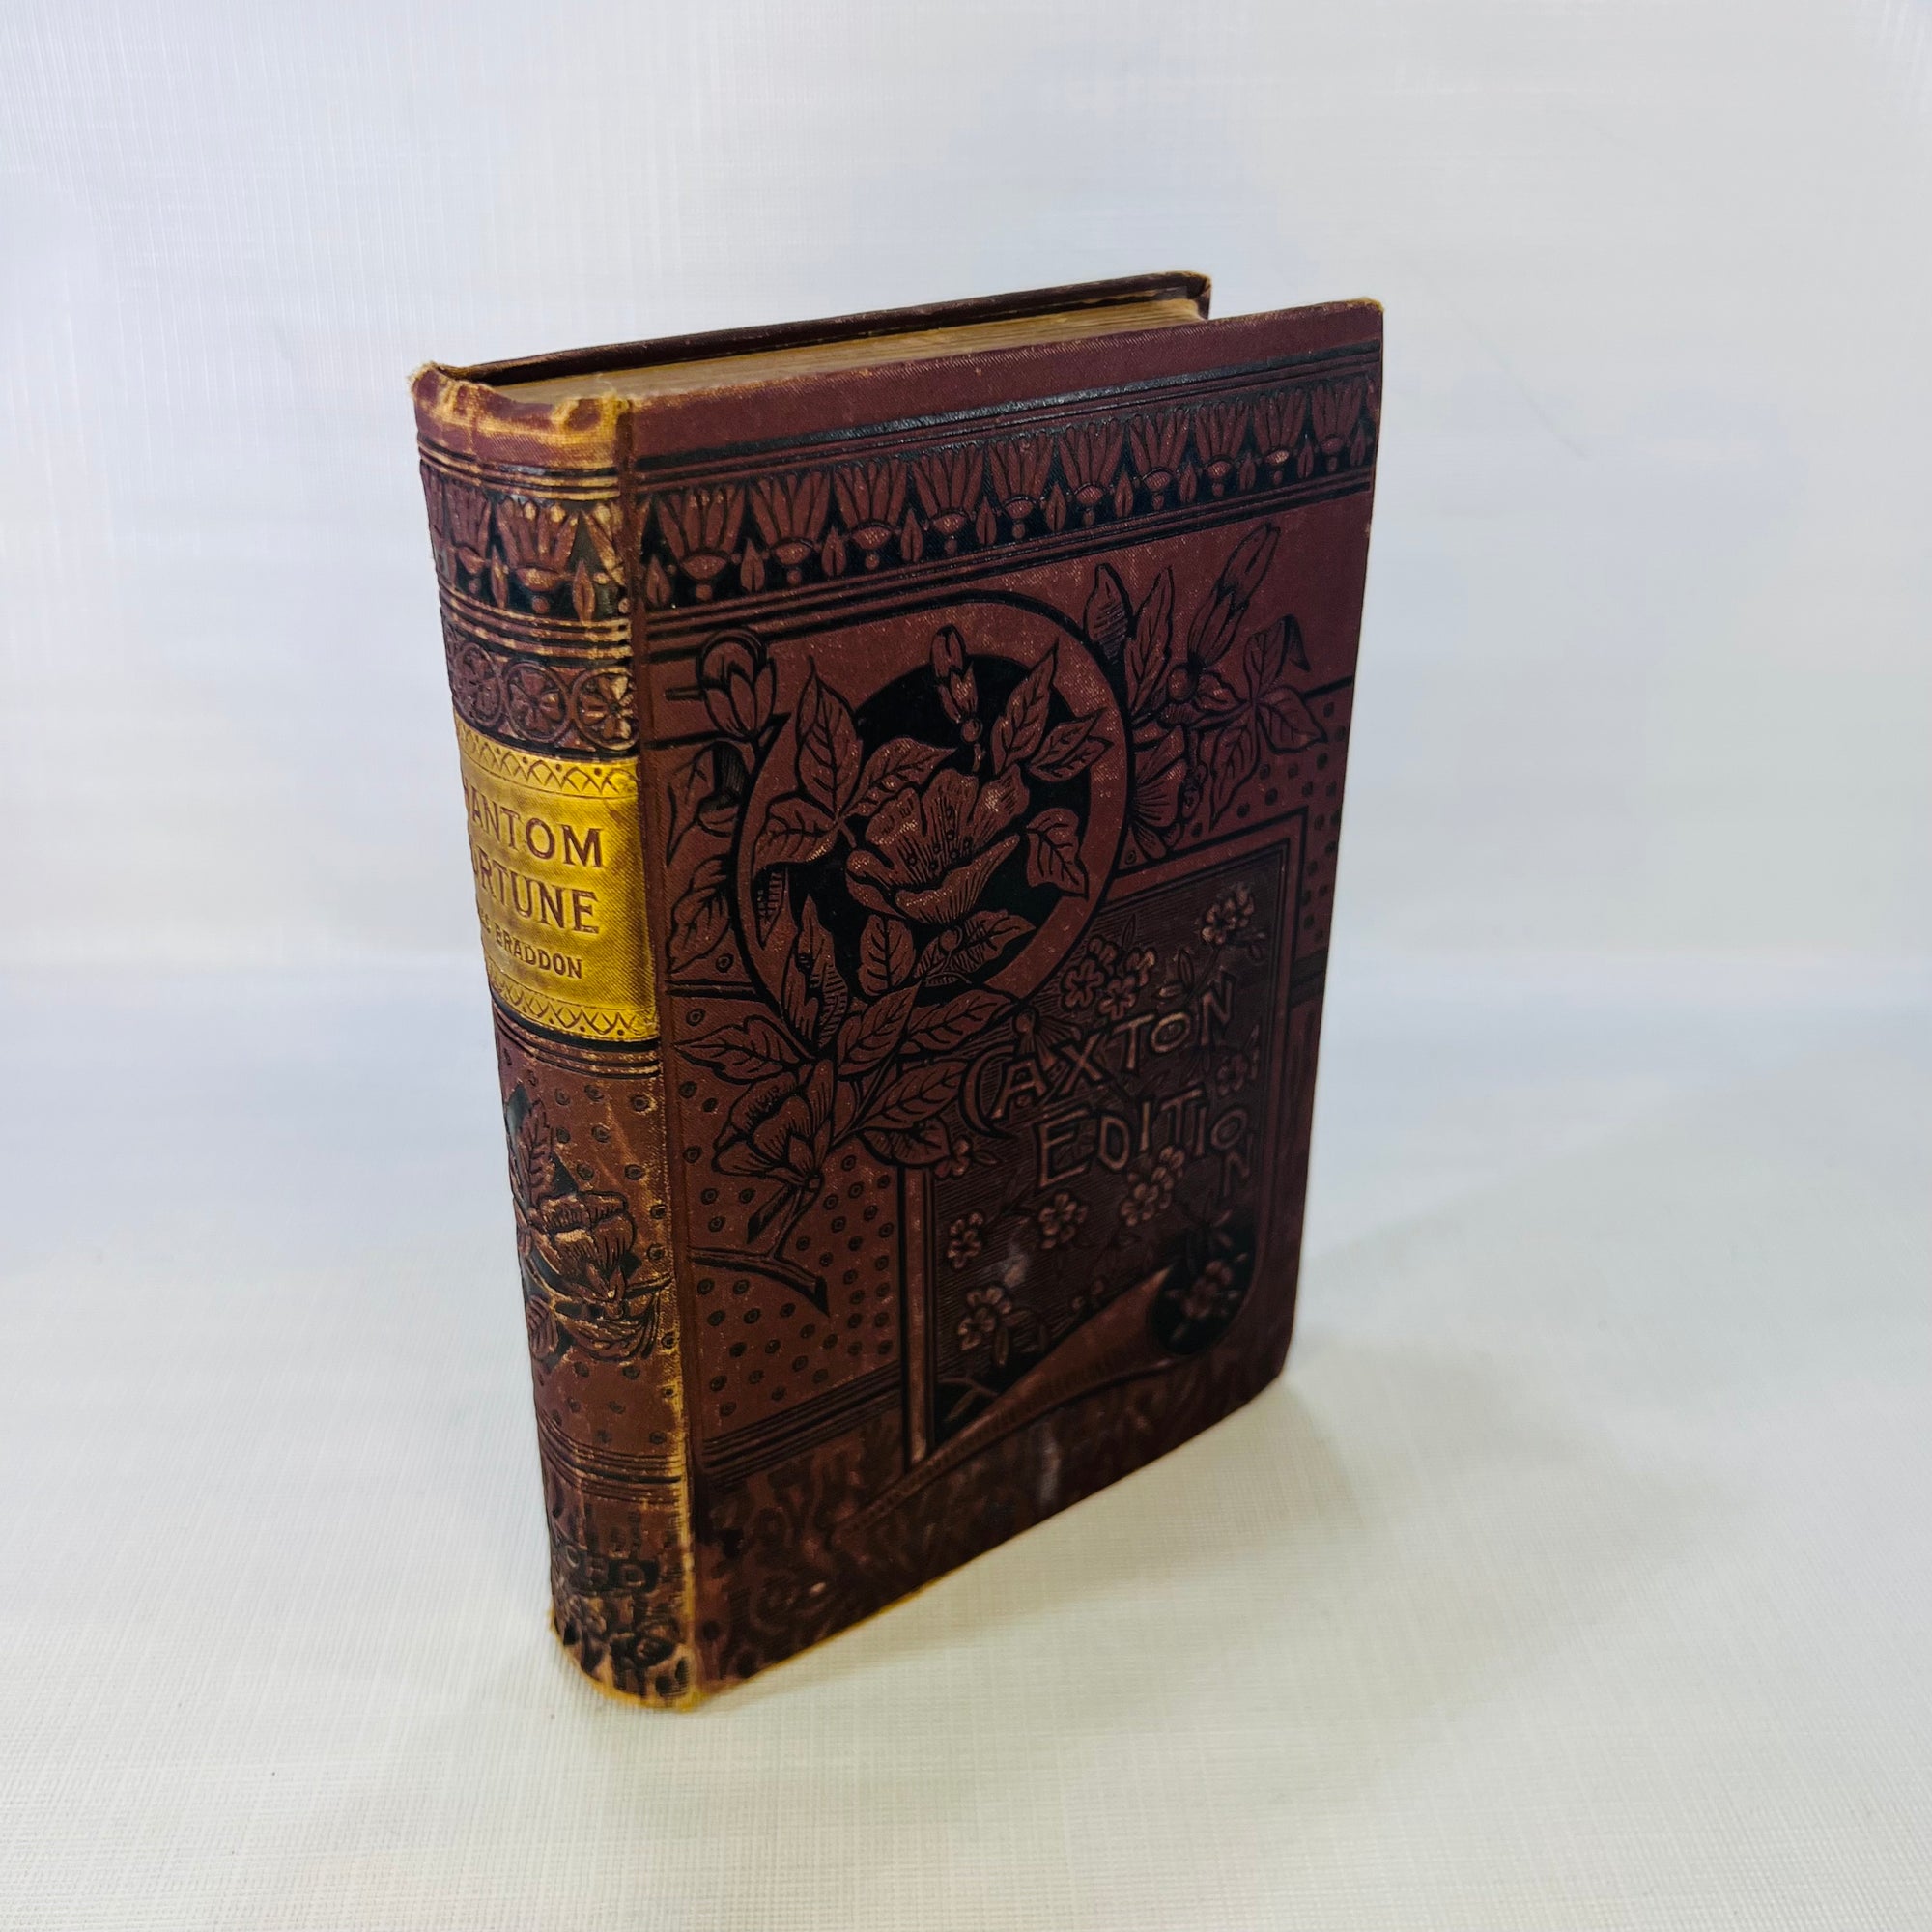 Phantom Fortune by Miss M.E. Braddon Belford, Clarke & Company Circa 1886 Caxton Edition